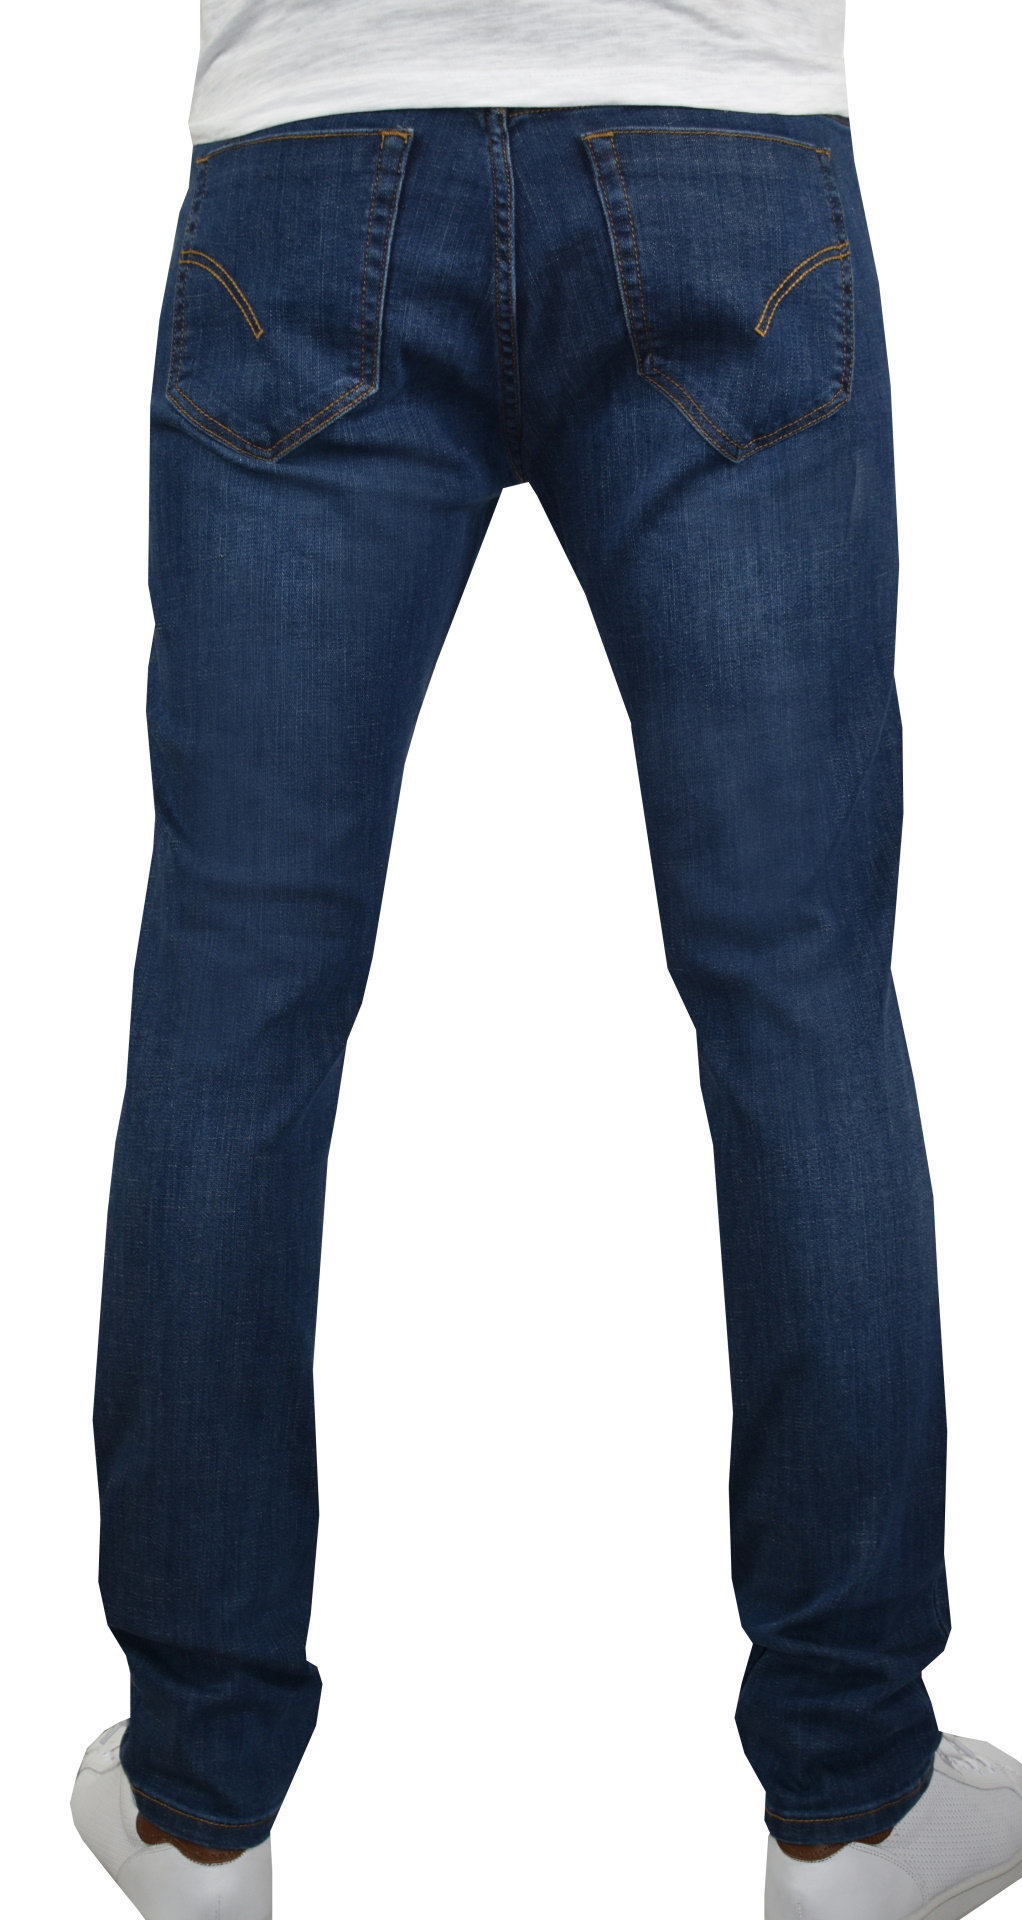 SAM JEANS UOMO 5 TASCHE BLU DENIM 1 1st american jeans fashion uomo 5 tasche colore blu medio denim - 99% cotton 1% elastan denim 1150 oz